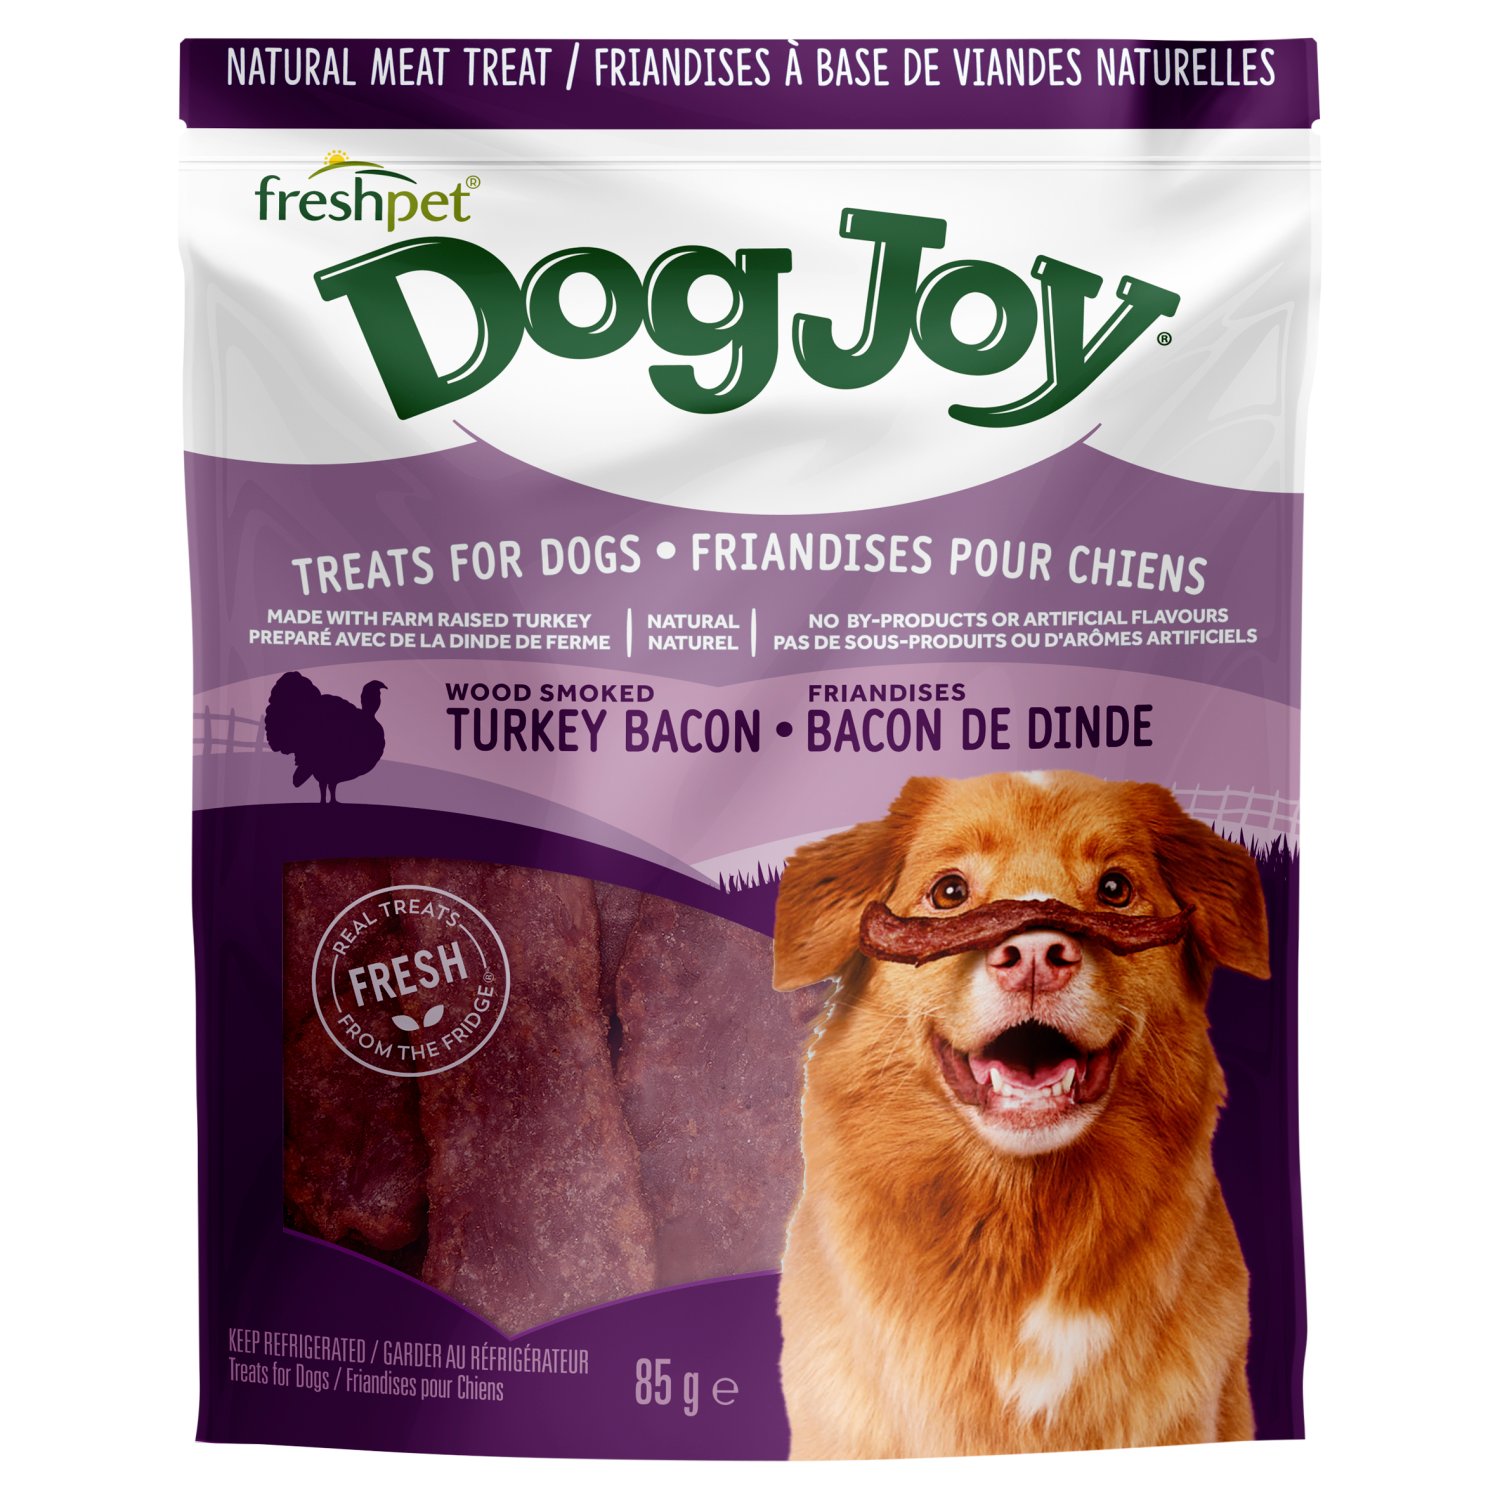 Freshpet Turkey Bacon Dog Treats (85 g)